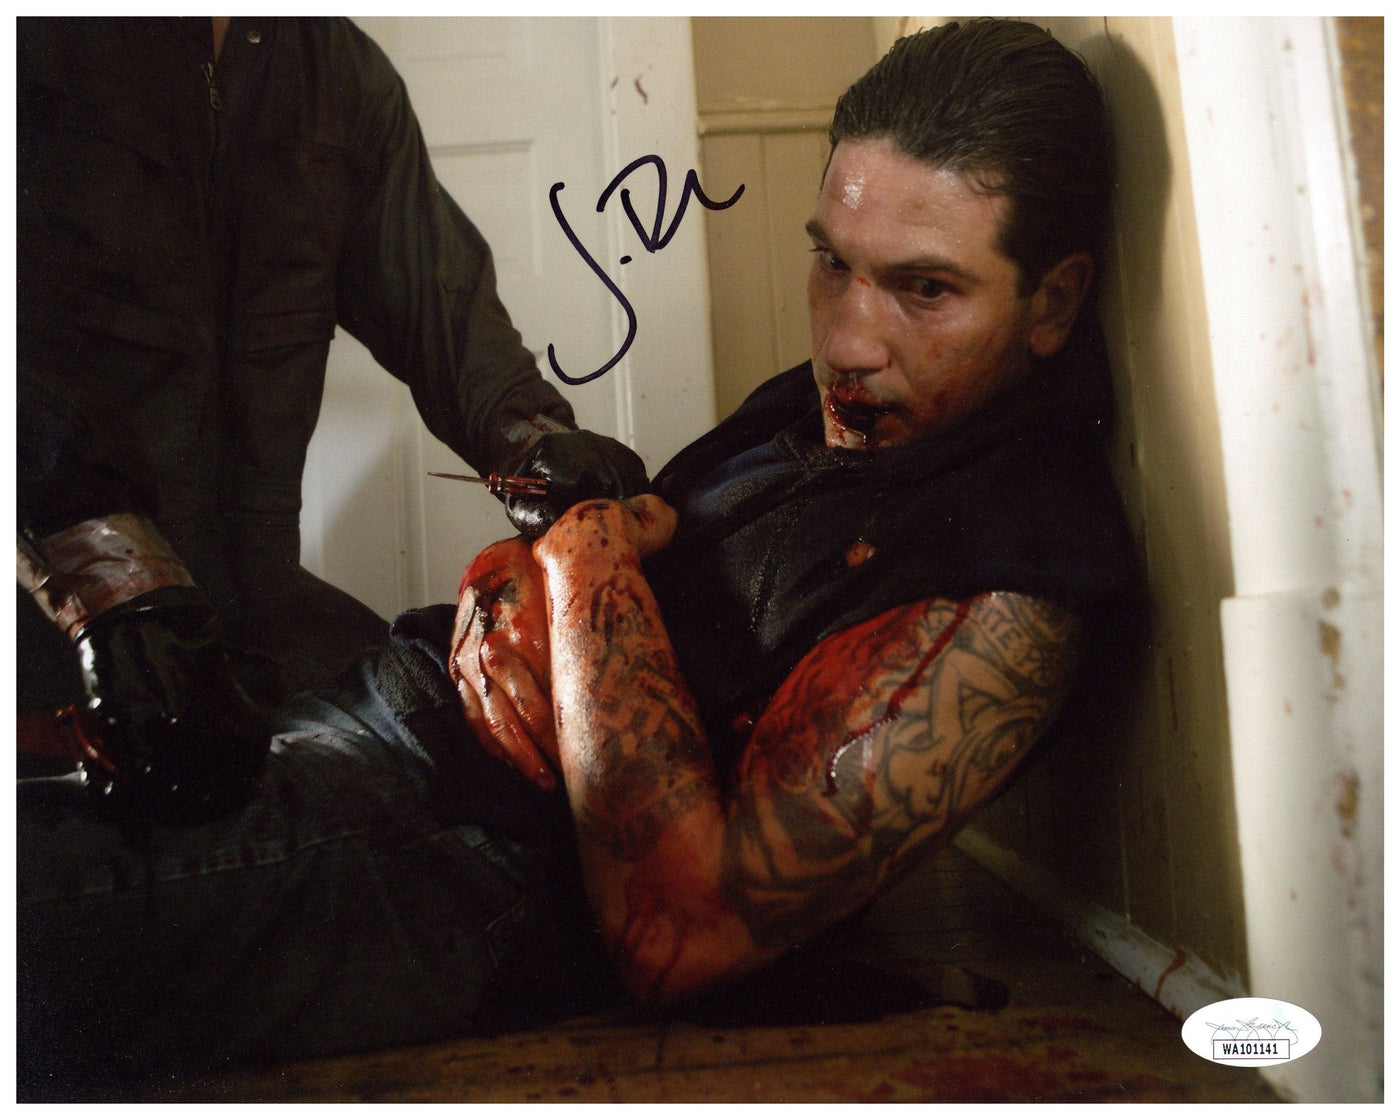 Jon Bernthal Signed 8x10 Photo Shot Caller Autographed JSA COA